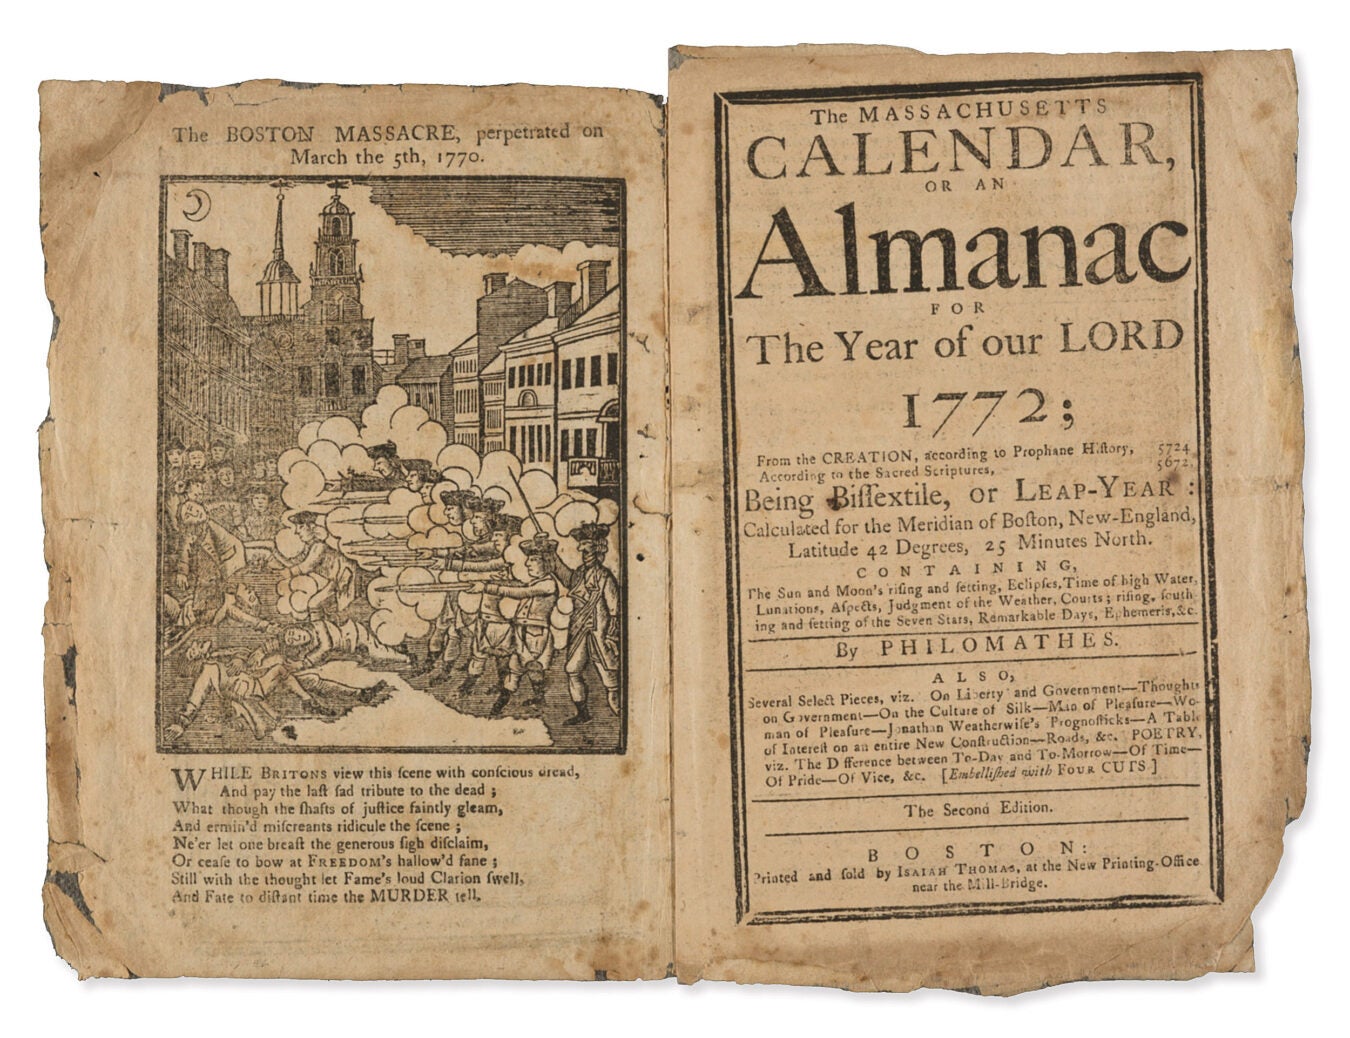 Back cover of John Winthrop’s 1772 almanac shows Paul Revere’s engraving of the Boston Massacre.